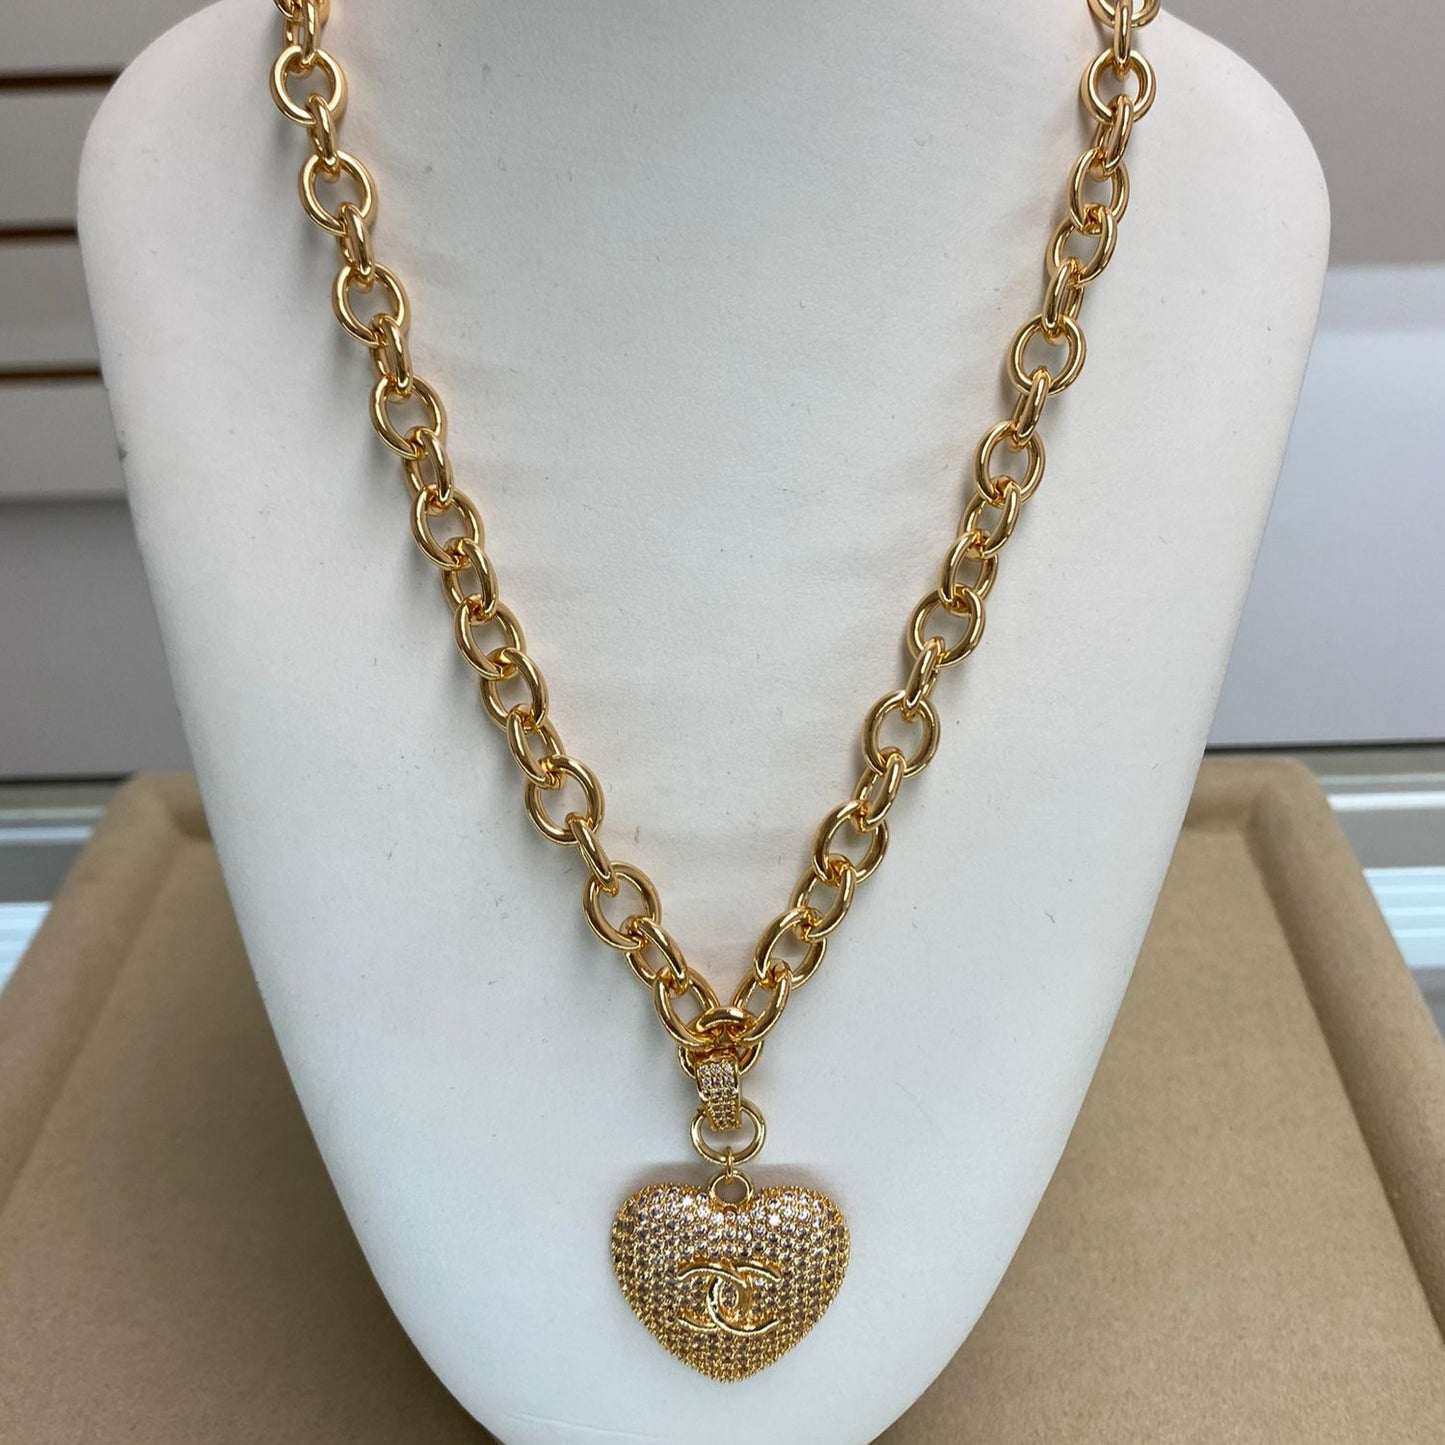 Portuguese Chain Necklace with Zirconia Heart Pendant